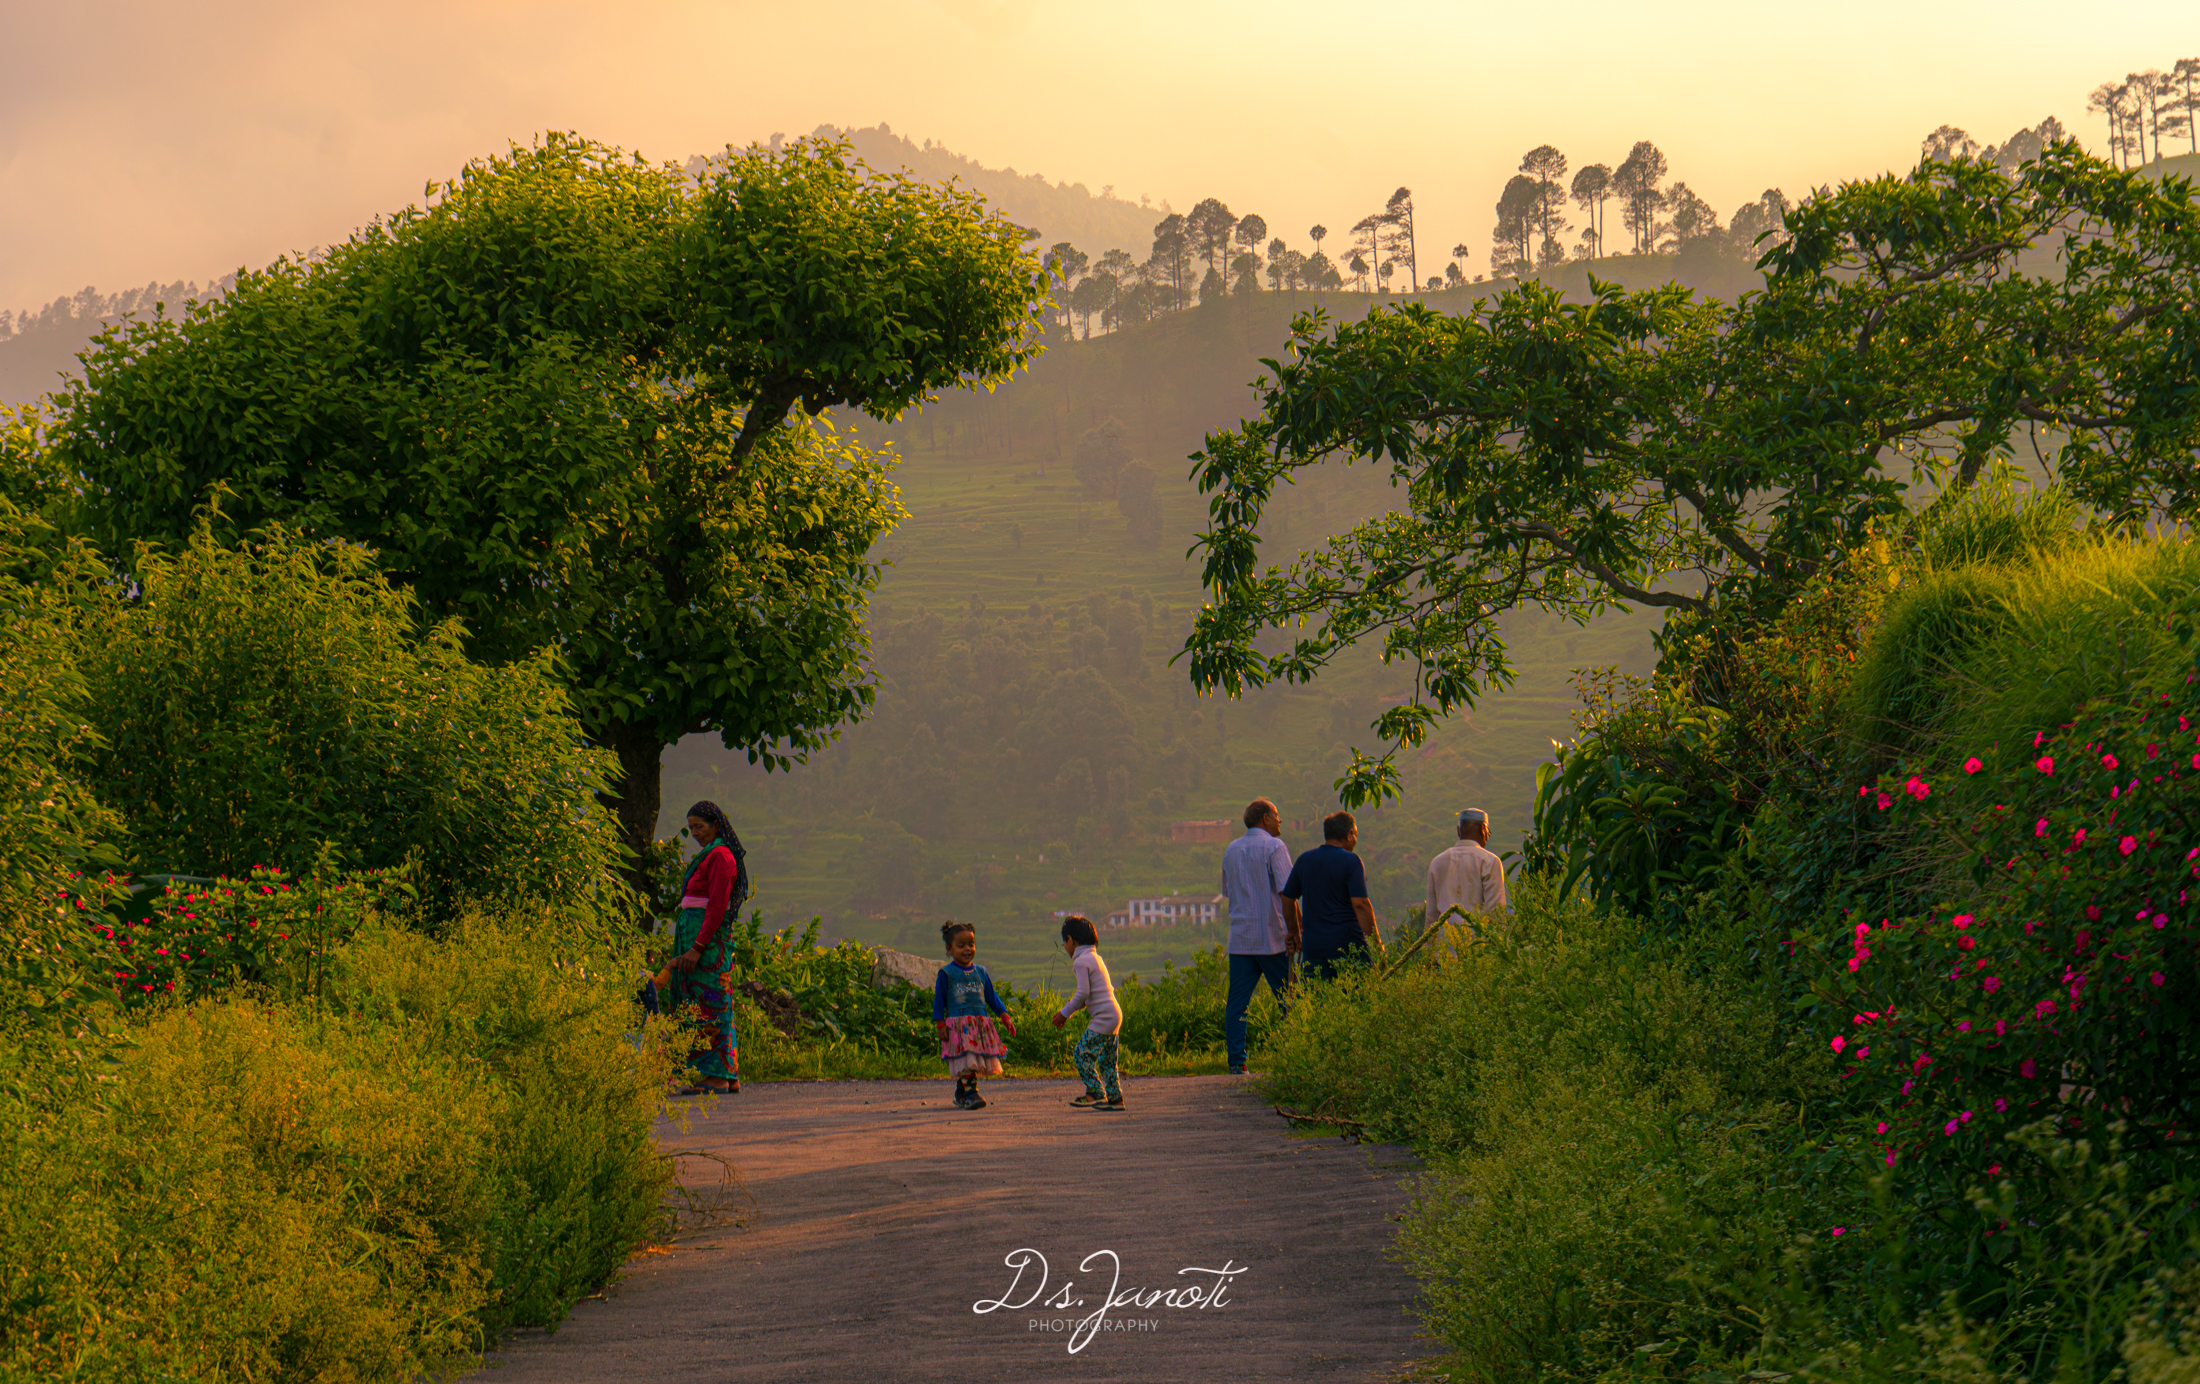 #evening  #evening walk #monsoon #green #village #india, Digvijay singh Janoti